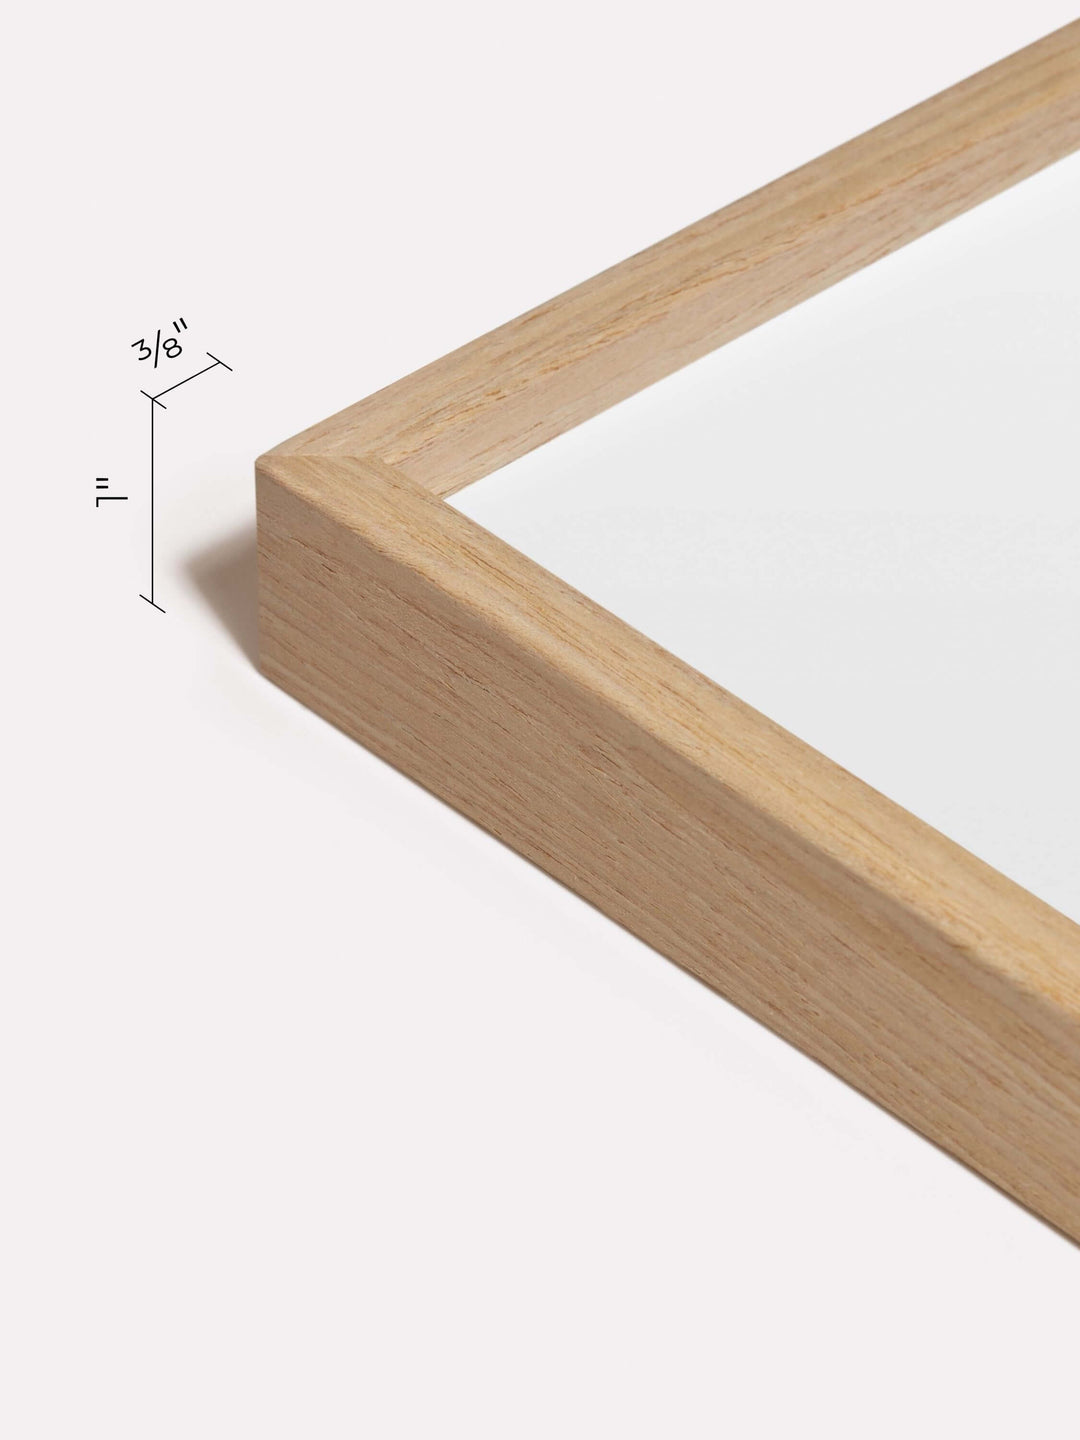 16x24-inch Thin Frame, Oak - Close-up view